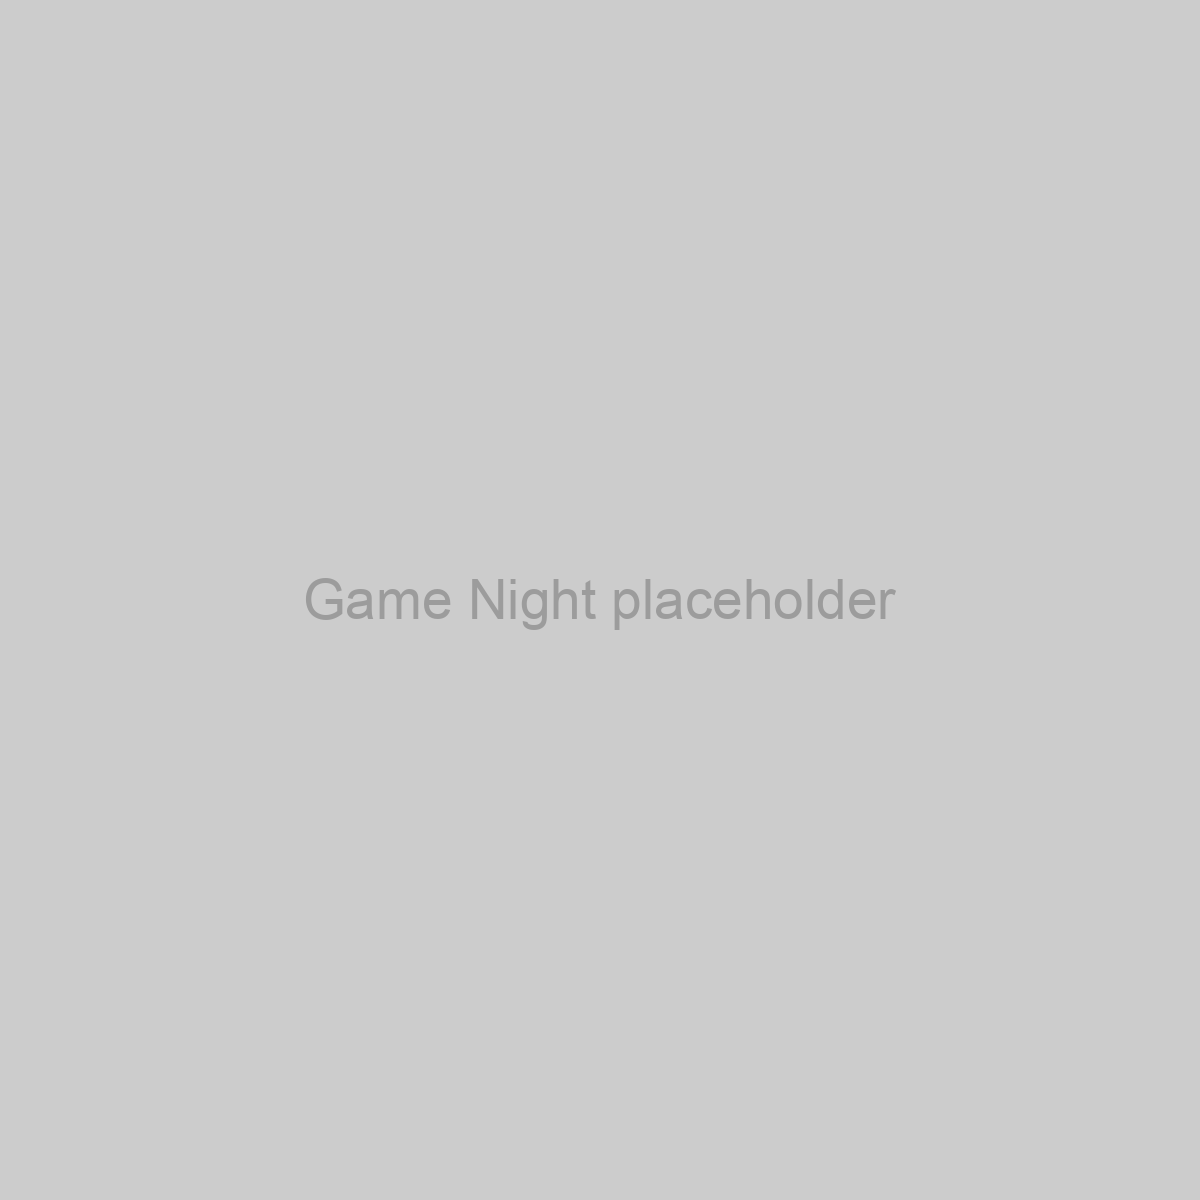 Game Night Placeholder Image